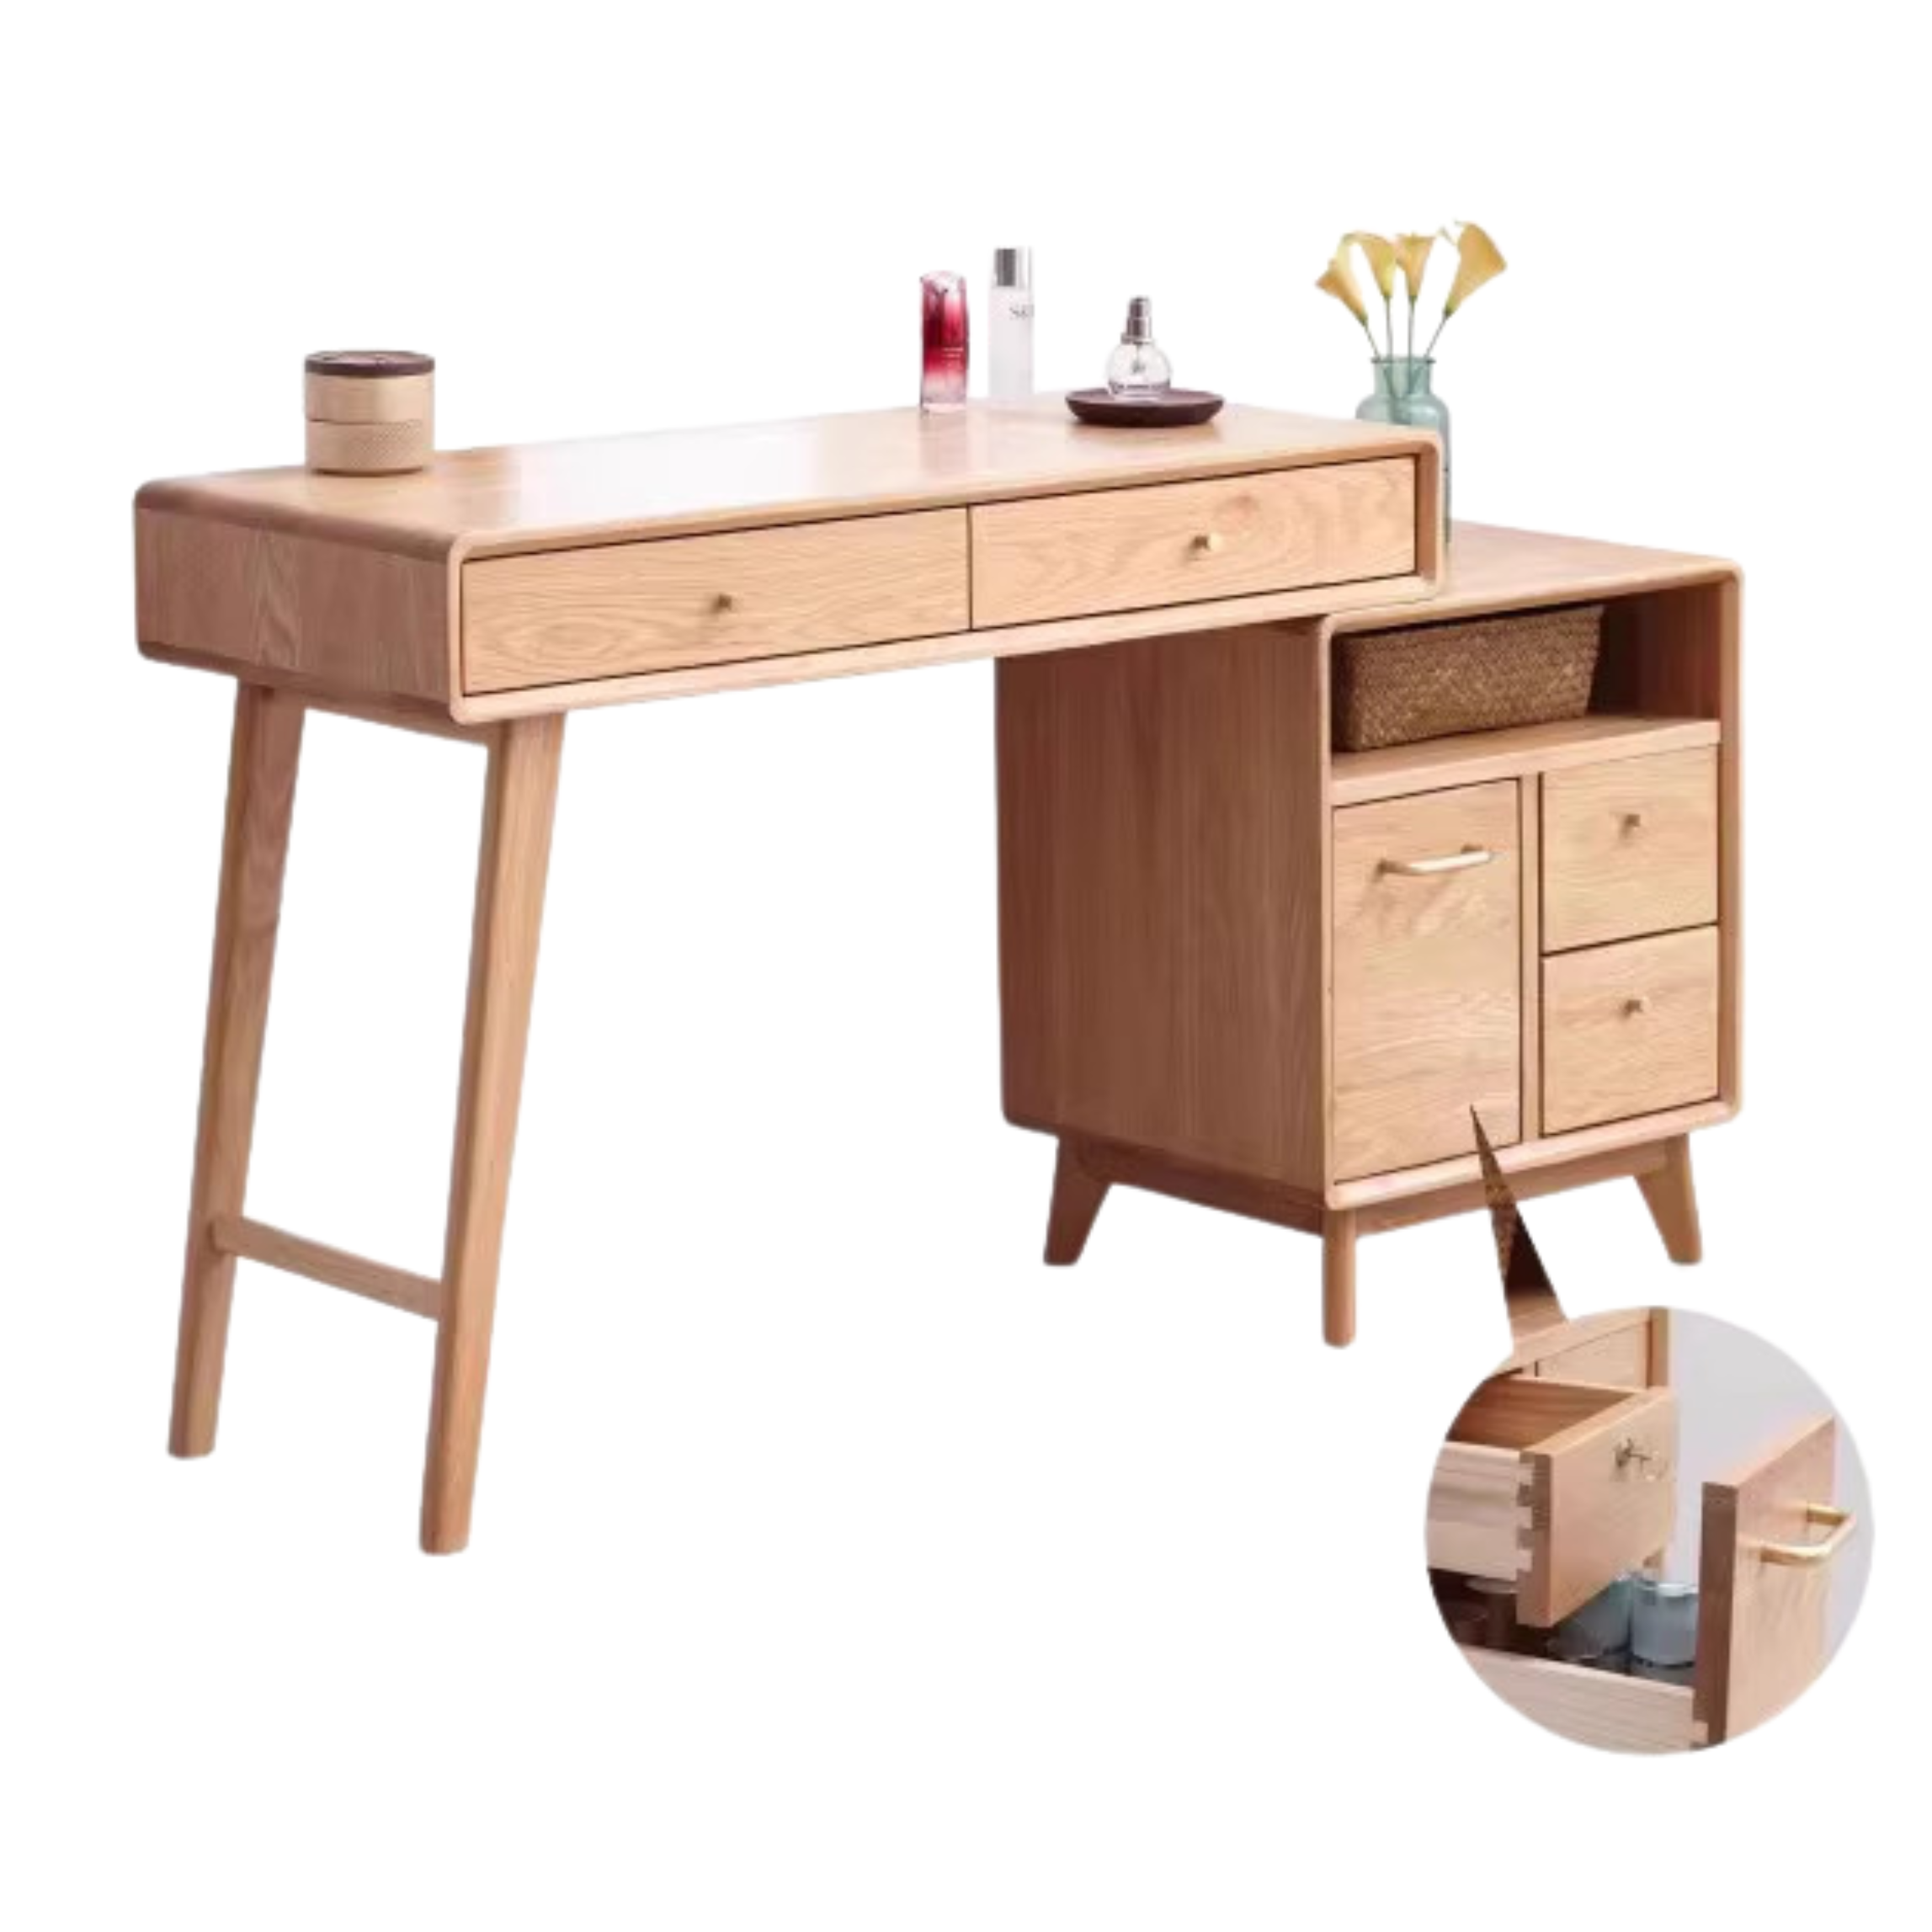 Oak solid wood Telescopic Dressing table cabinet: